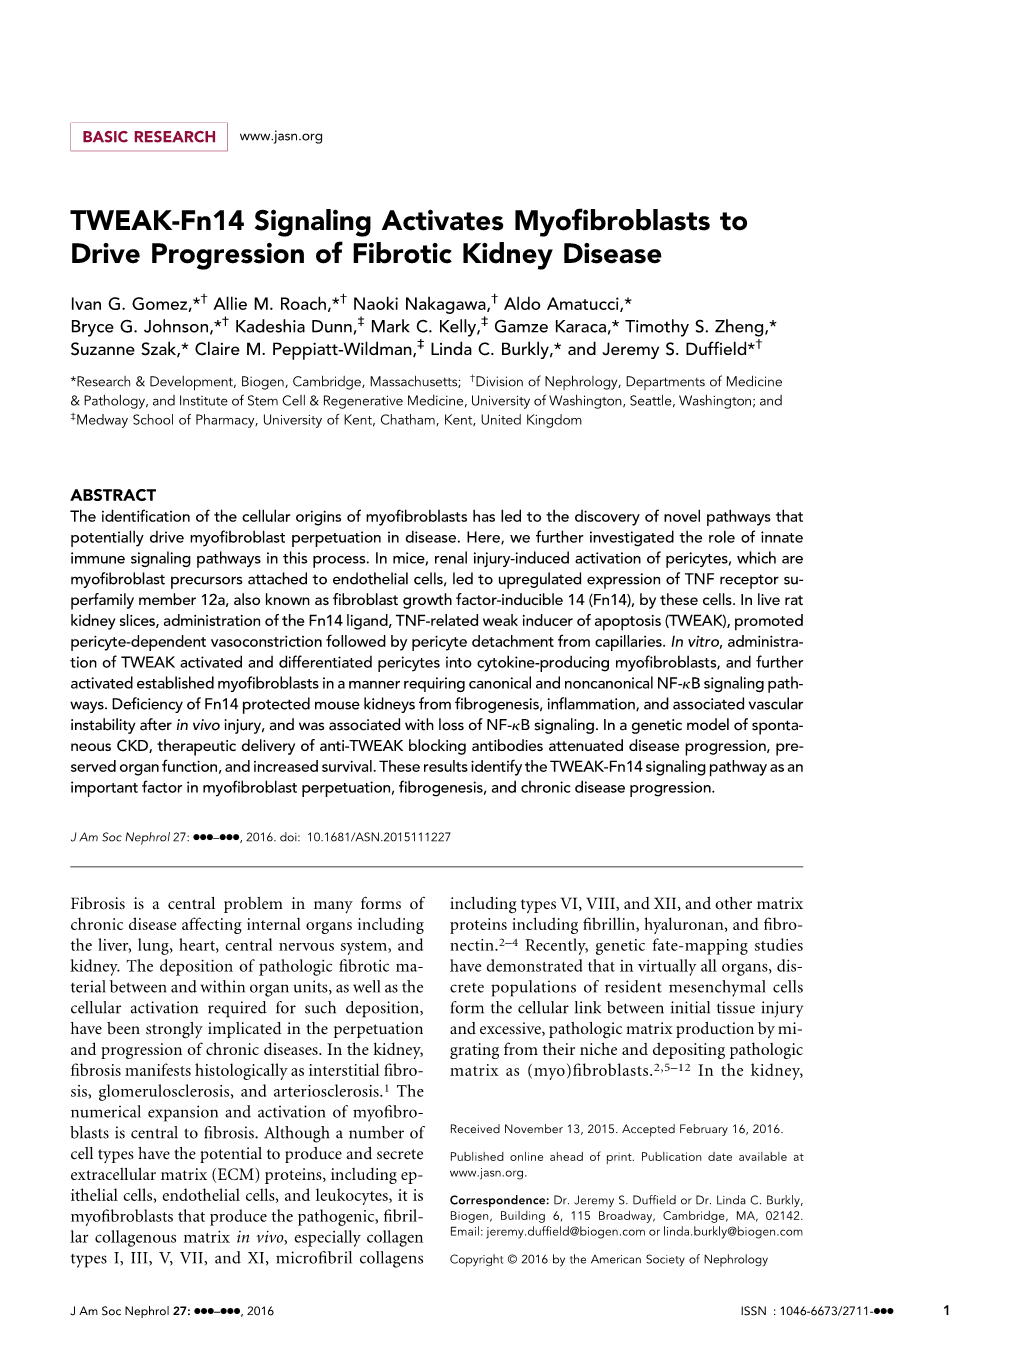 TWEAK-Fn14 Signaling Activates Myofibroblasts to Drive Progression